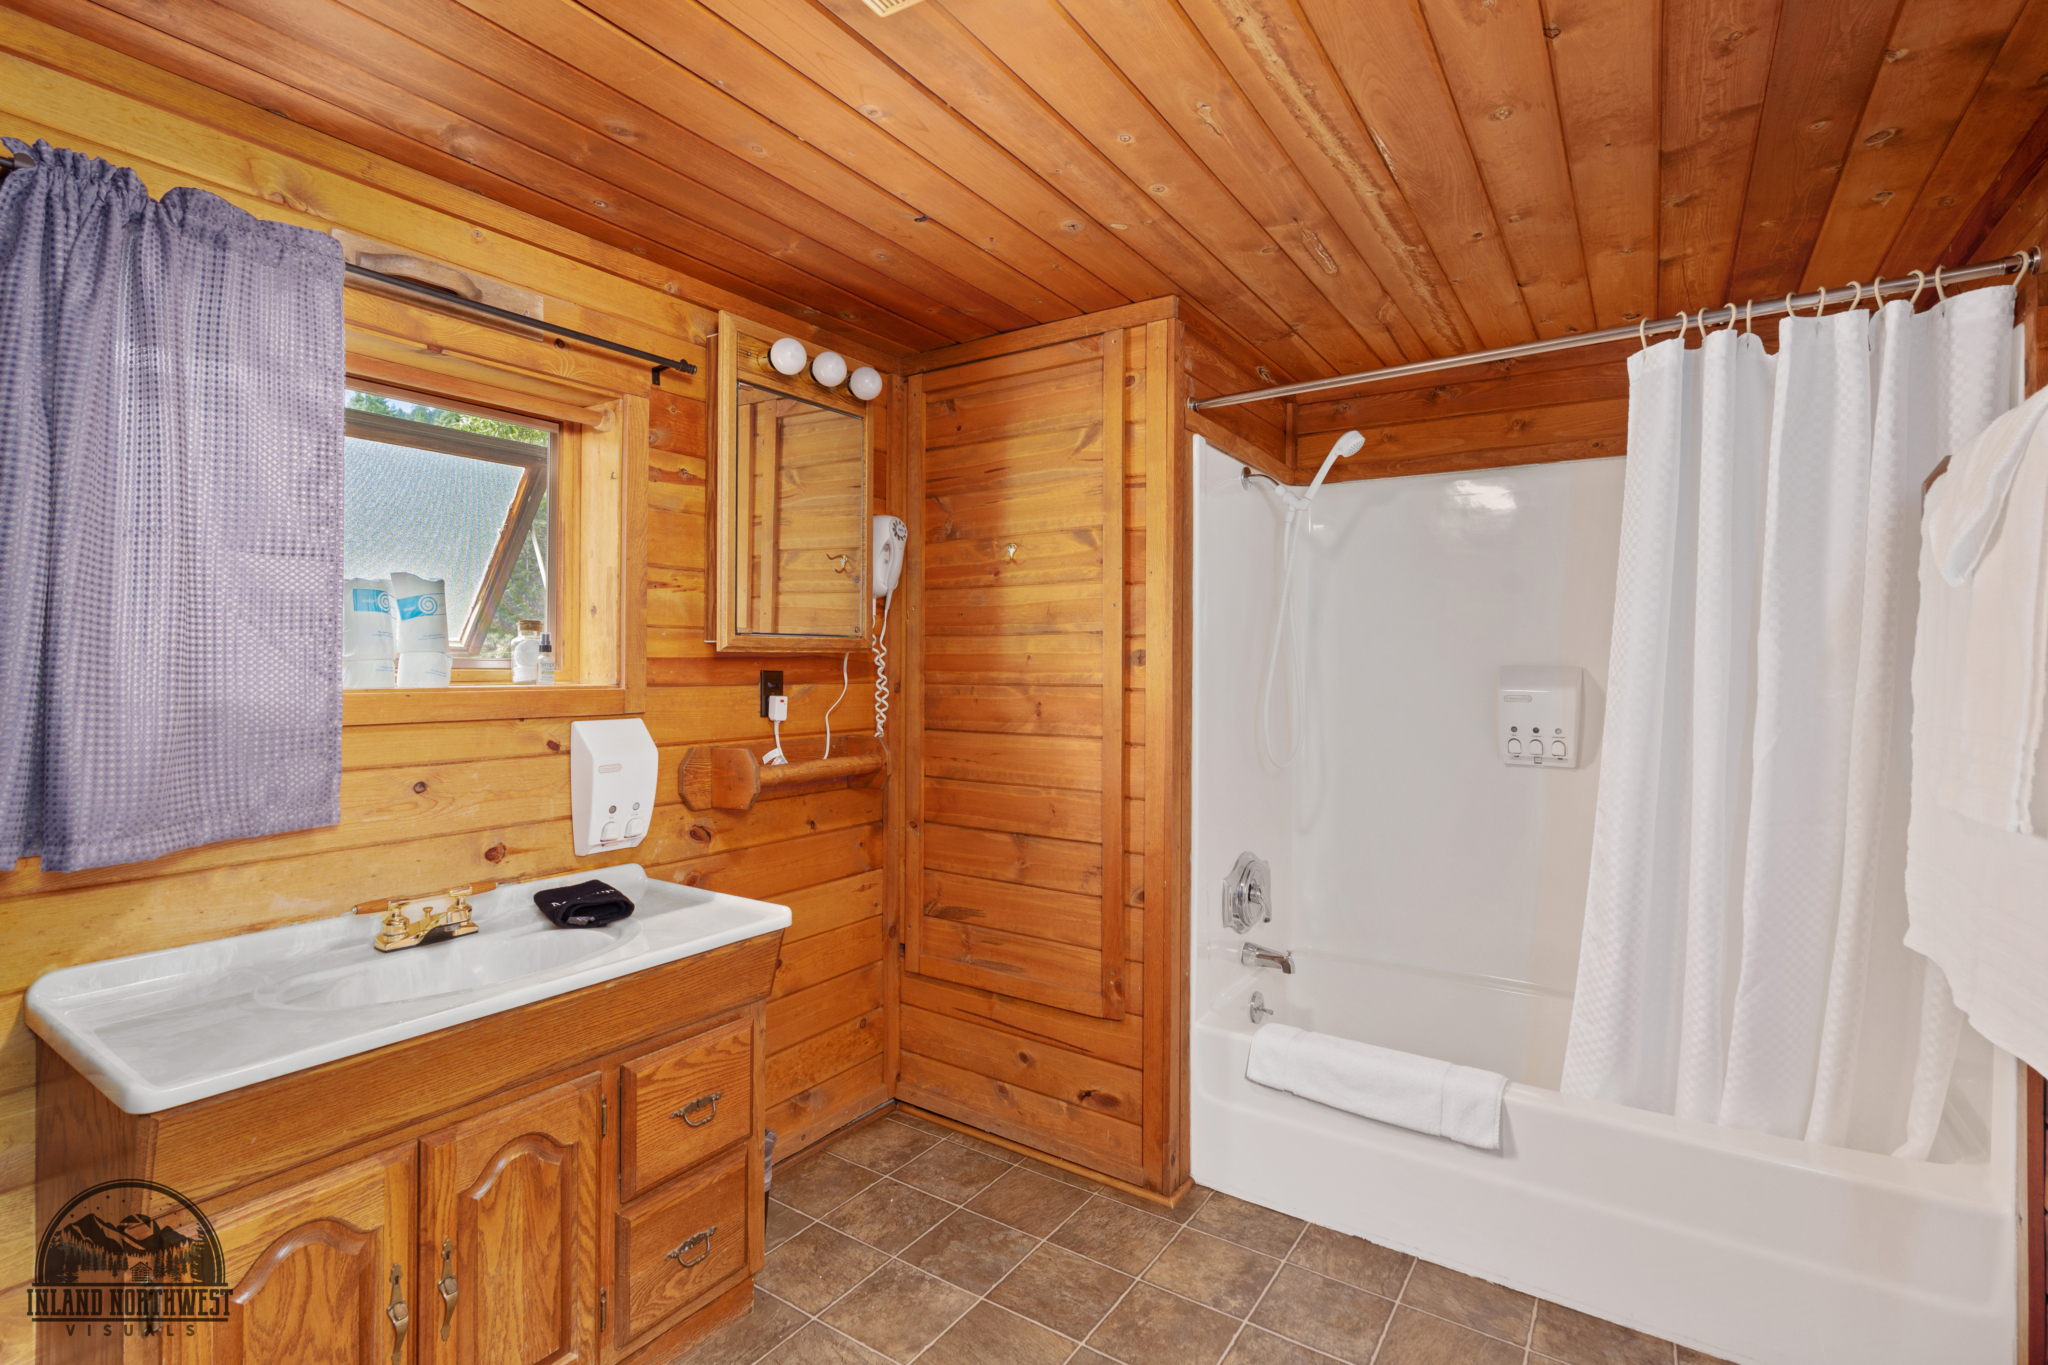 Appaloosa Cabin bathroom with shower/tub combo.